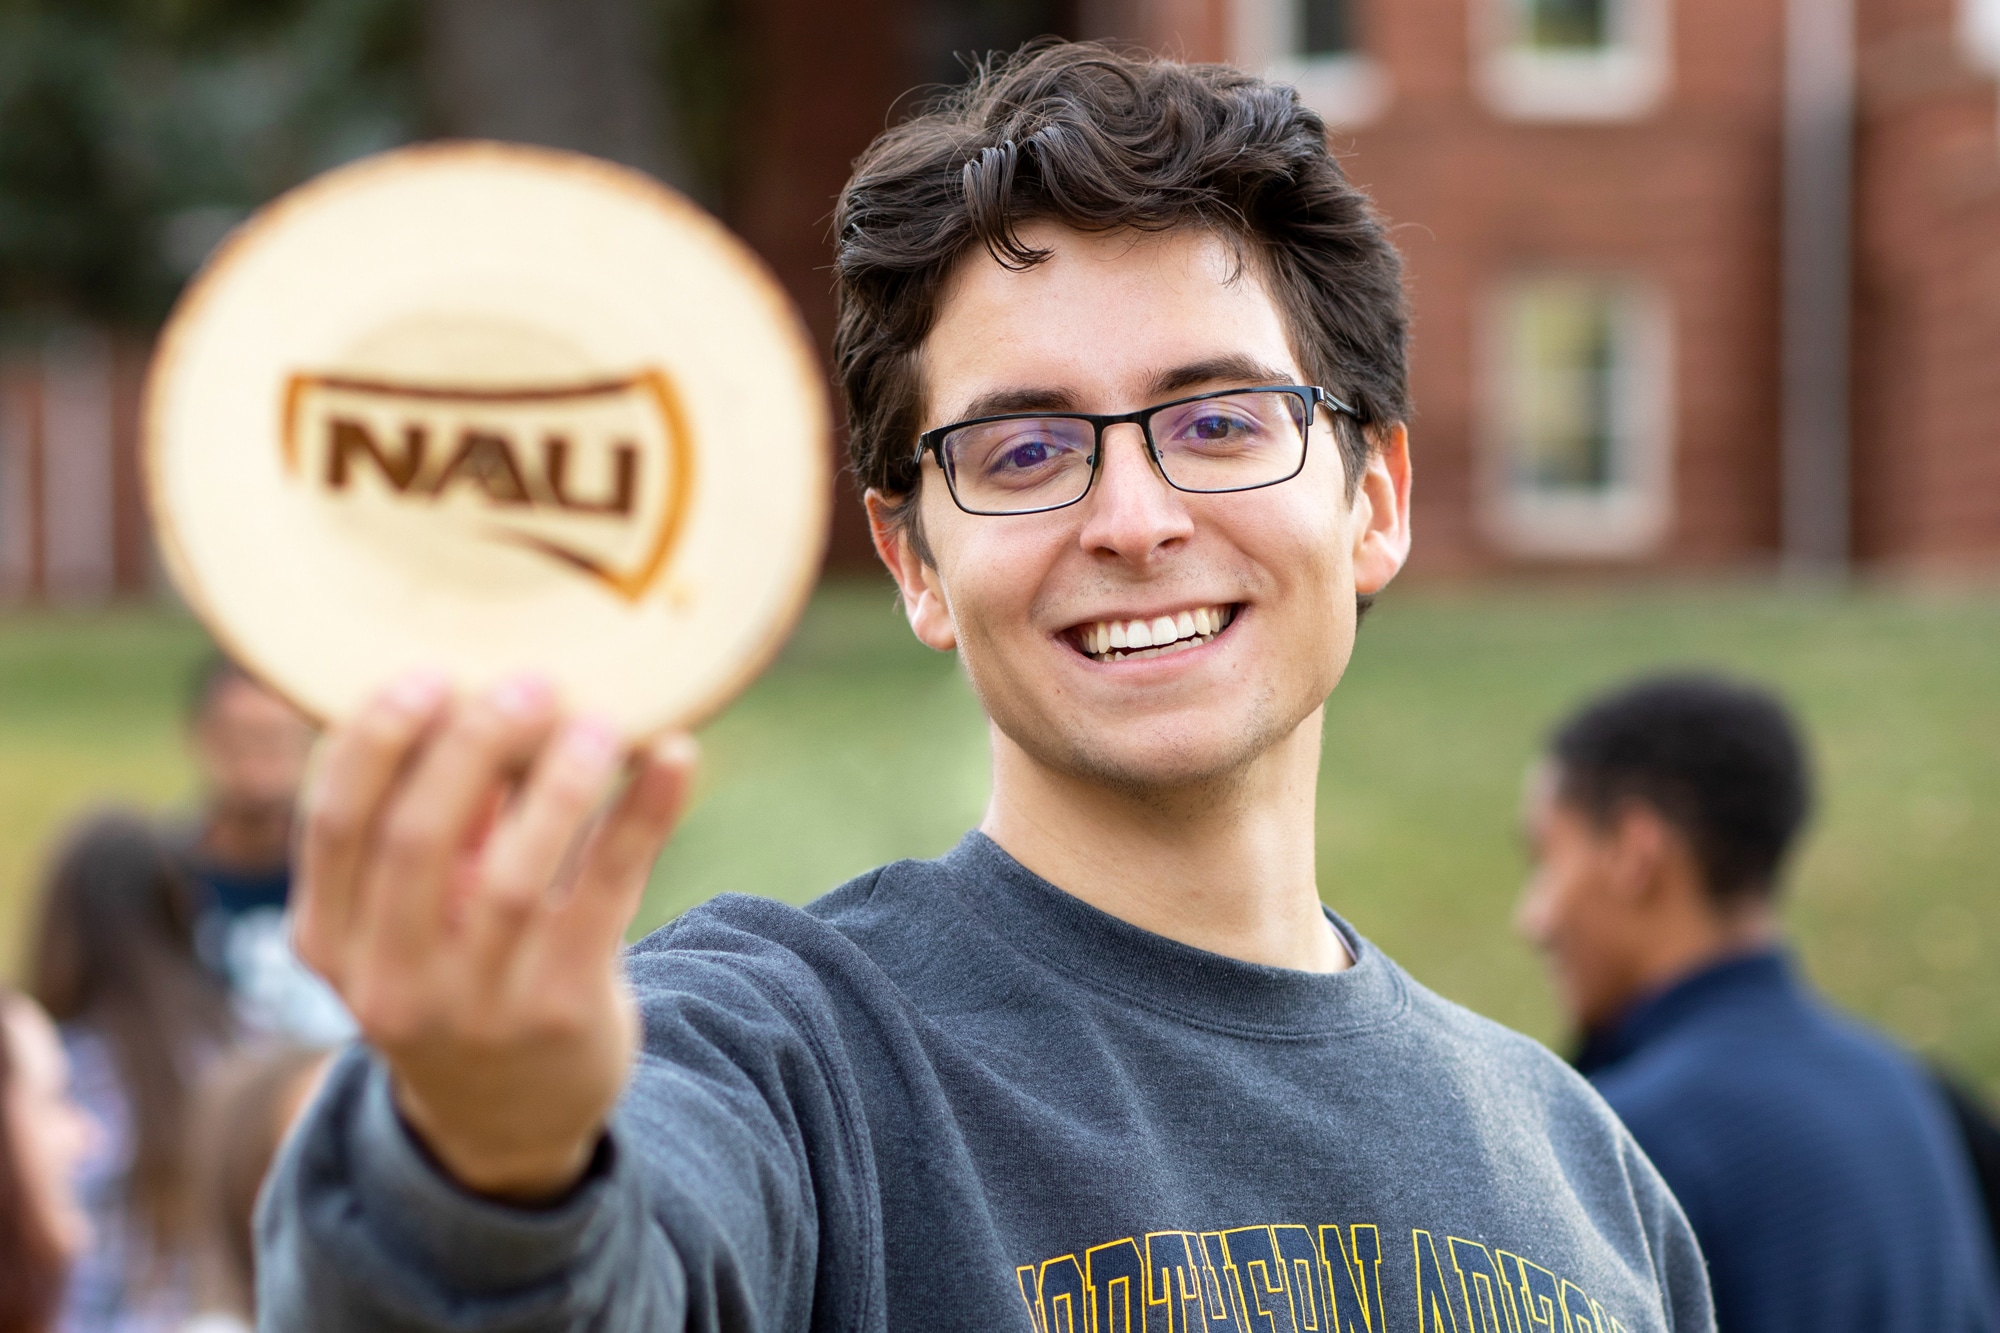 NAU student wearing an NAU sweatshirt, holding a round piece of wood with the NAU logo on it